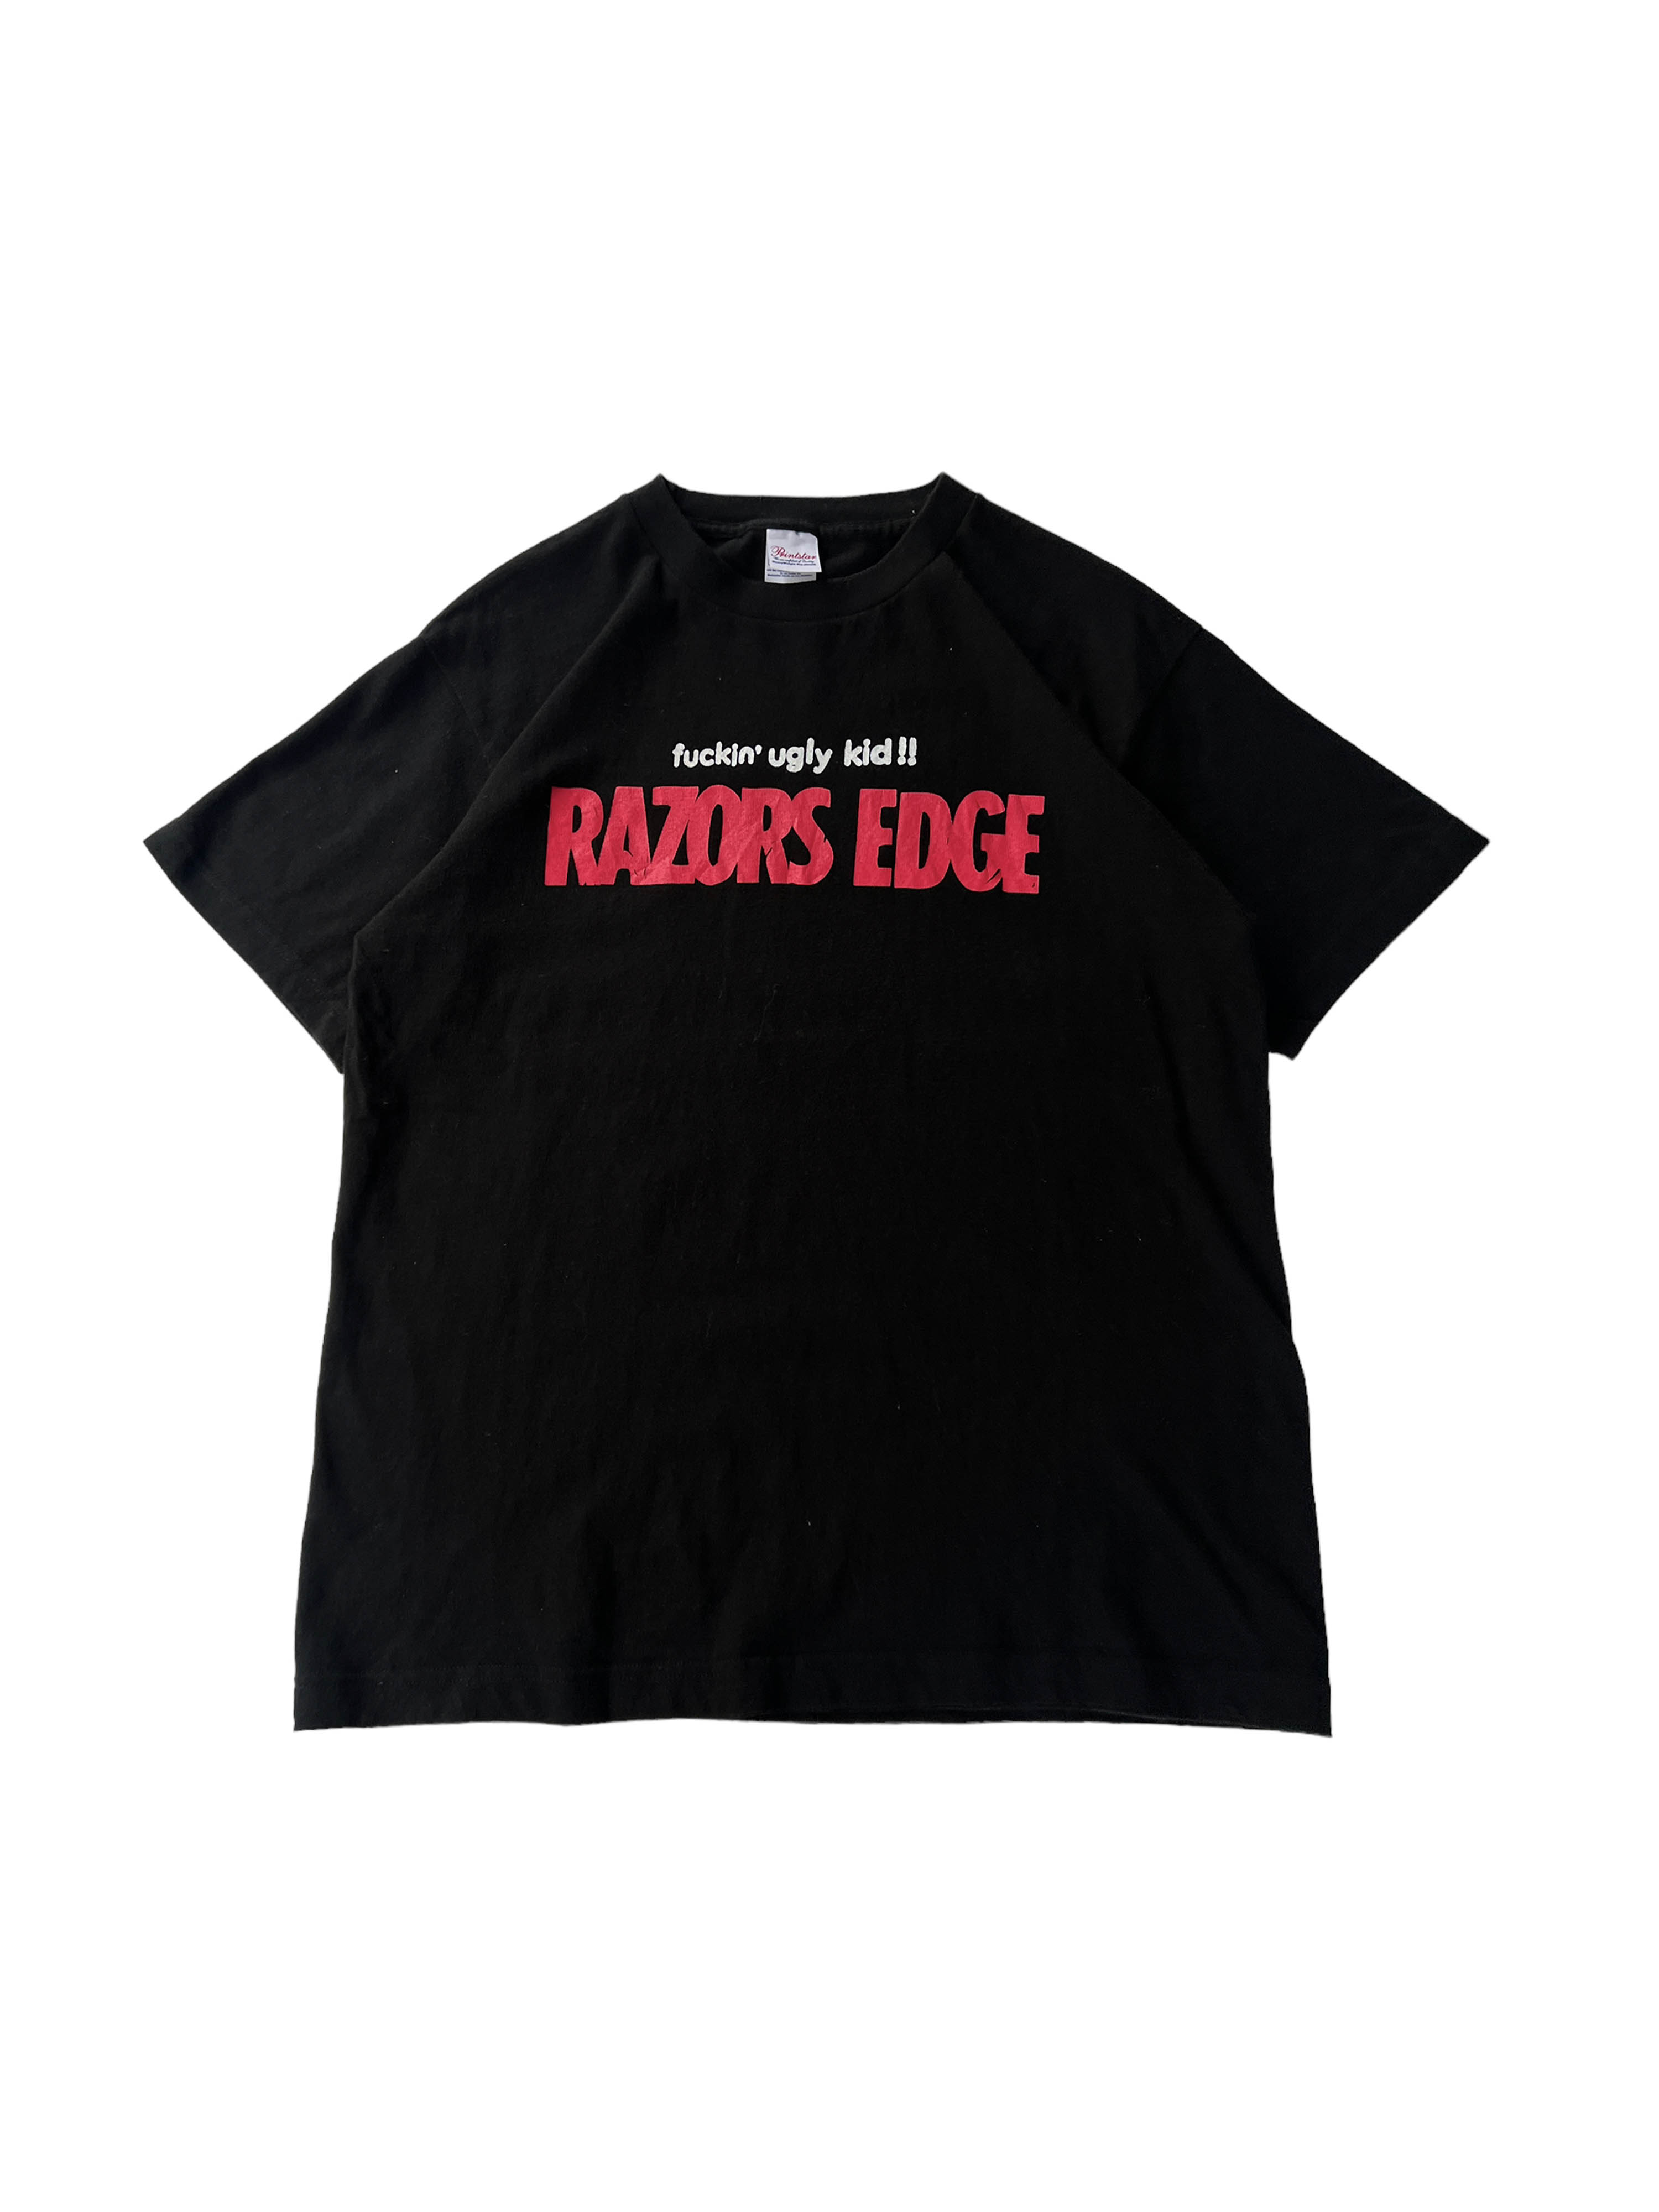 RAZOR EDGE tour t-shirts